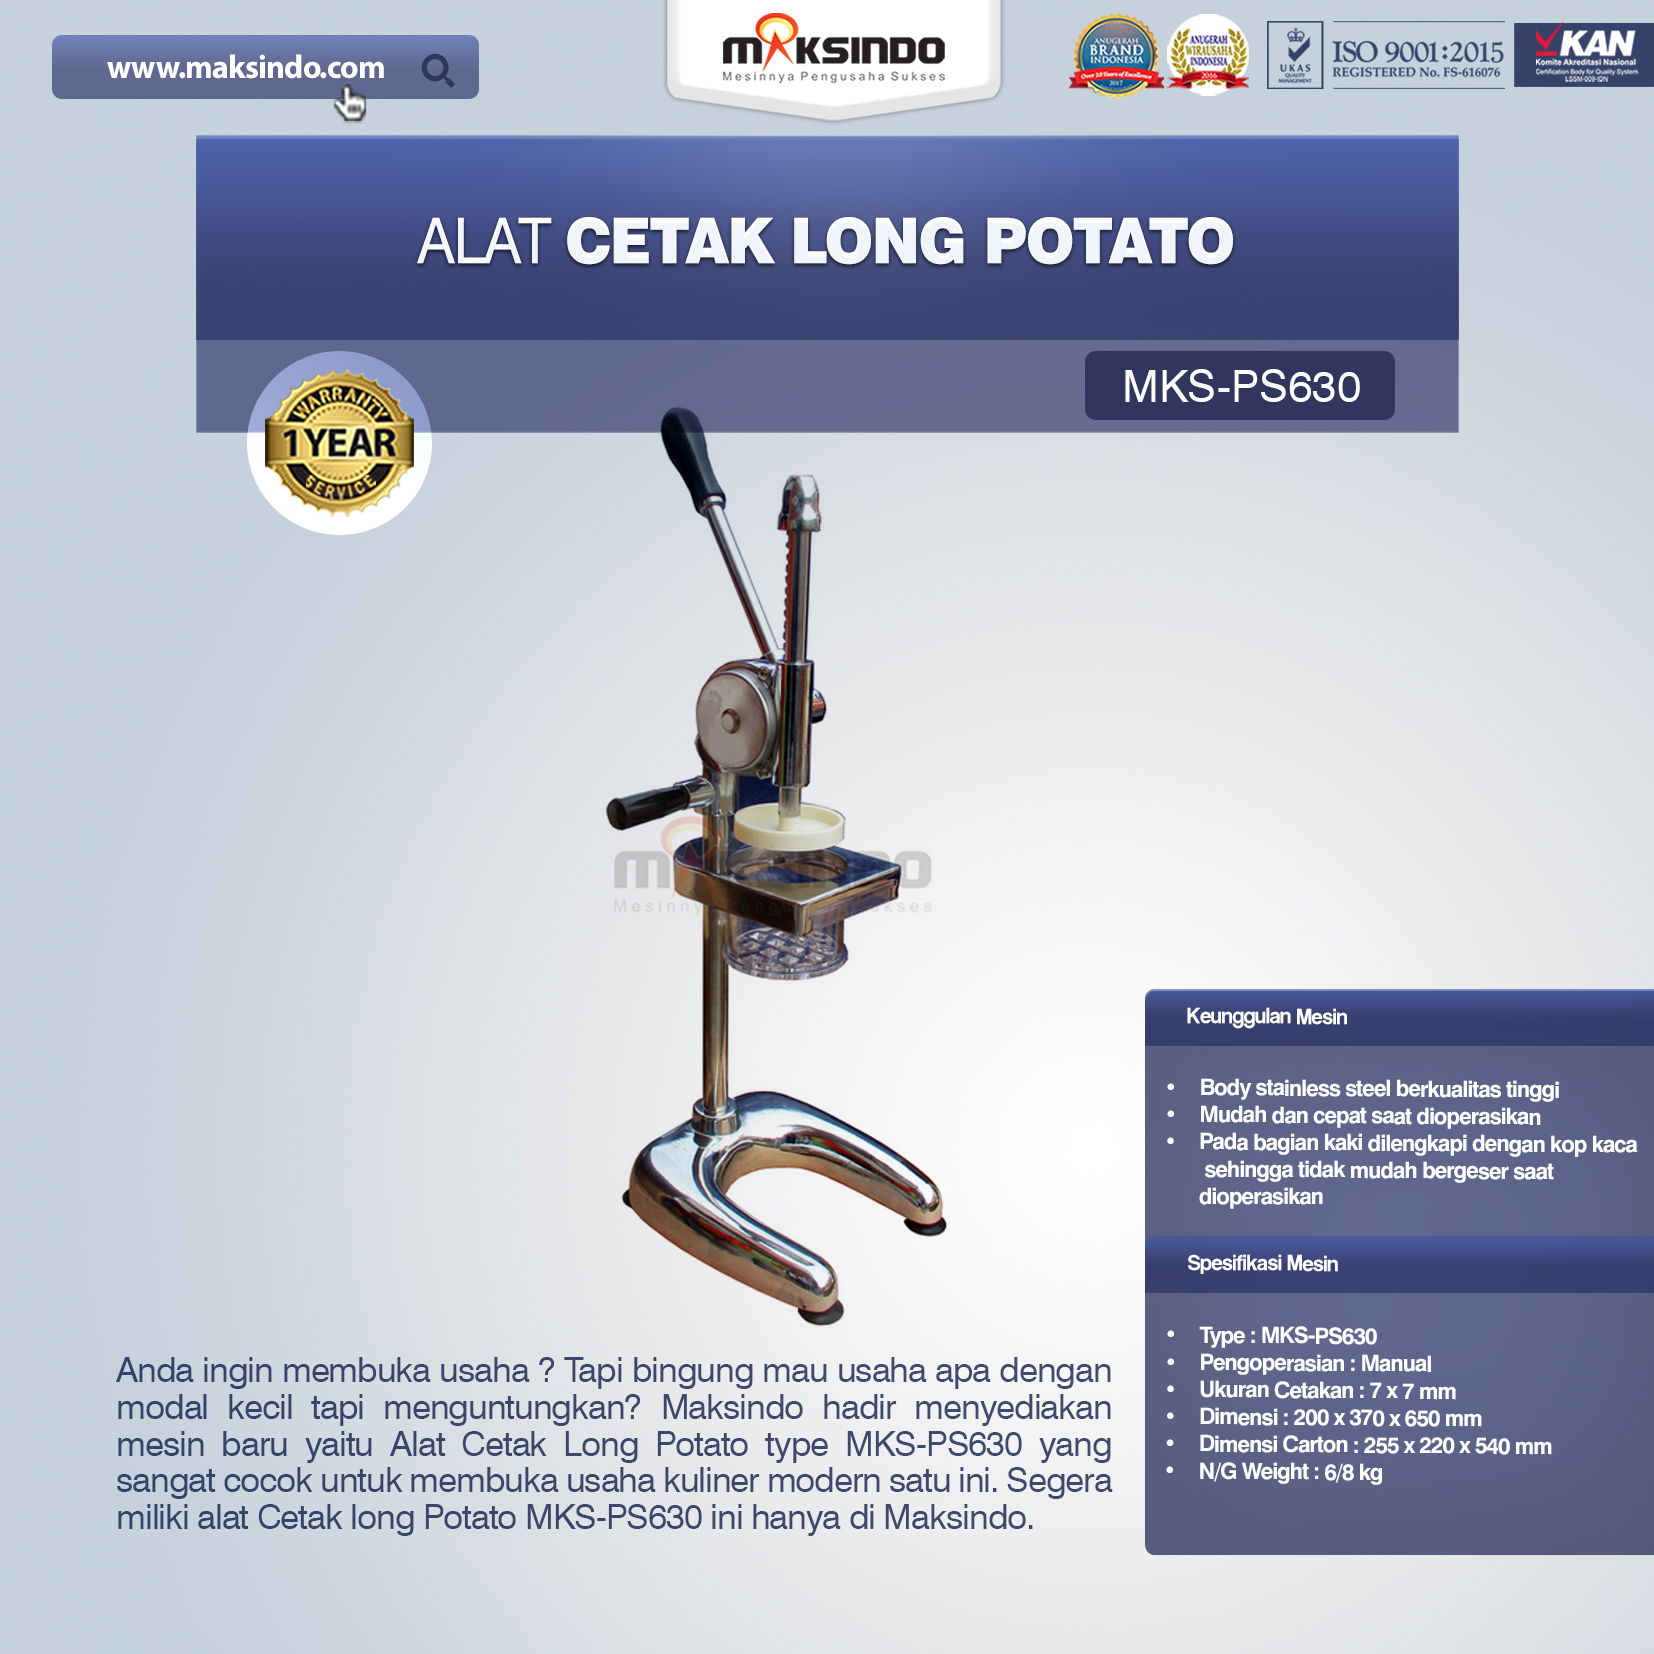 Jual Alat Cetak Long Potato MKS-PS630 di Blitar